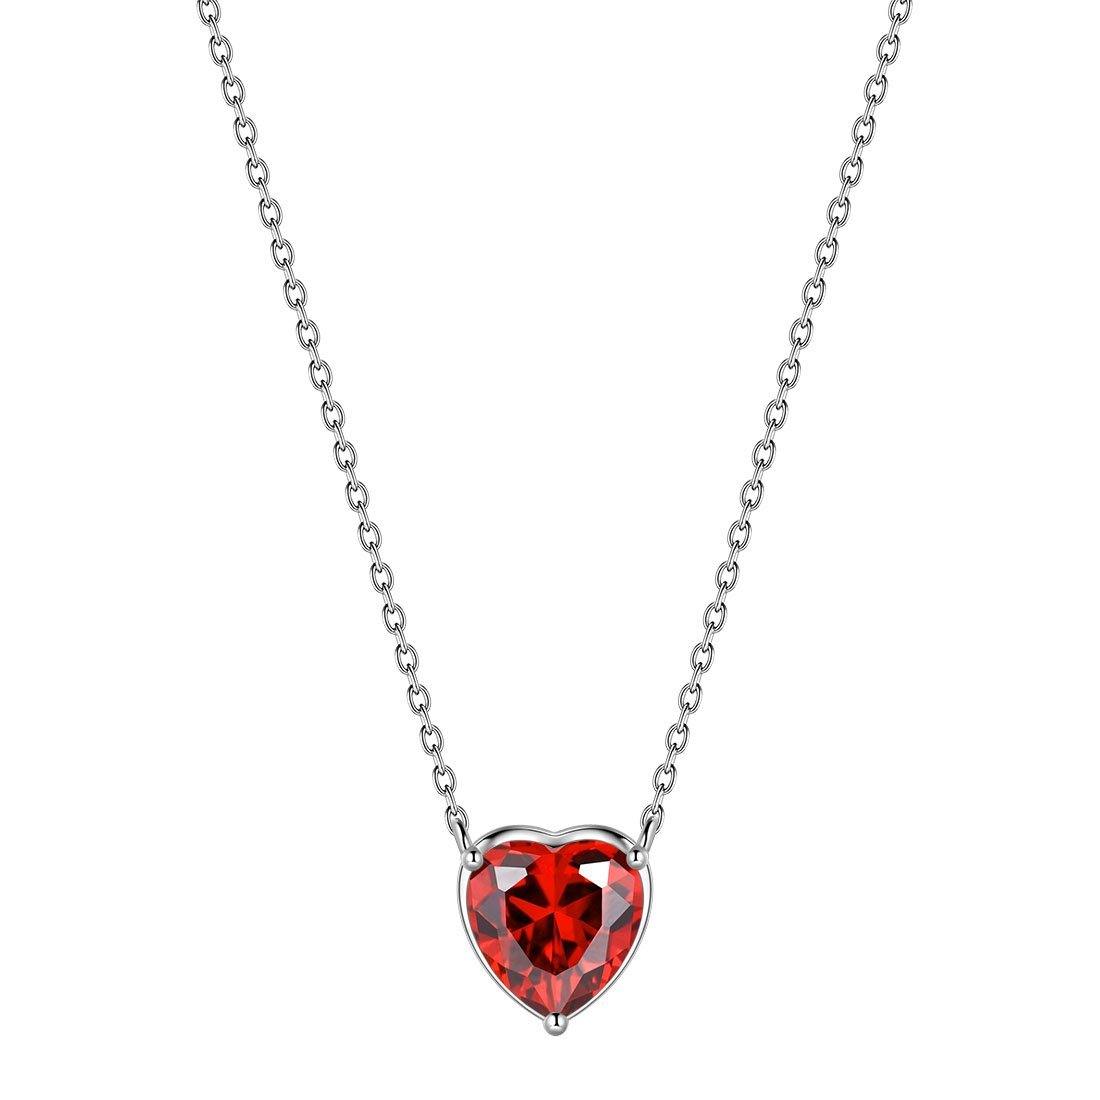 Birthstone Pendant Hearts Necklaces Sterling Silver January-Garnet Aurora Tears Jewelry